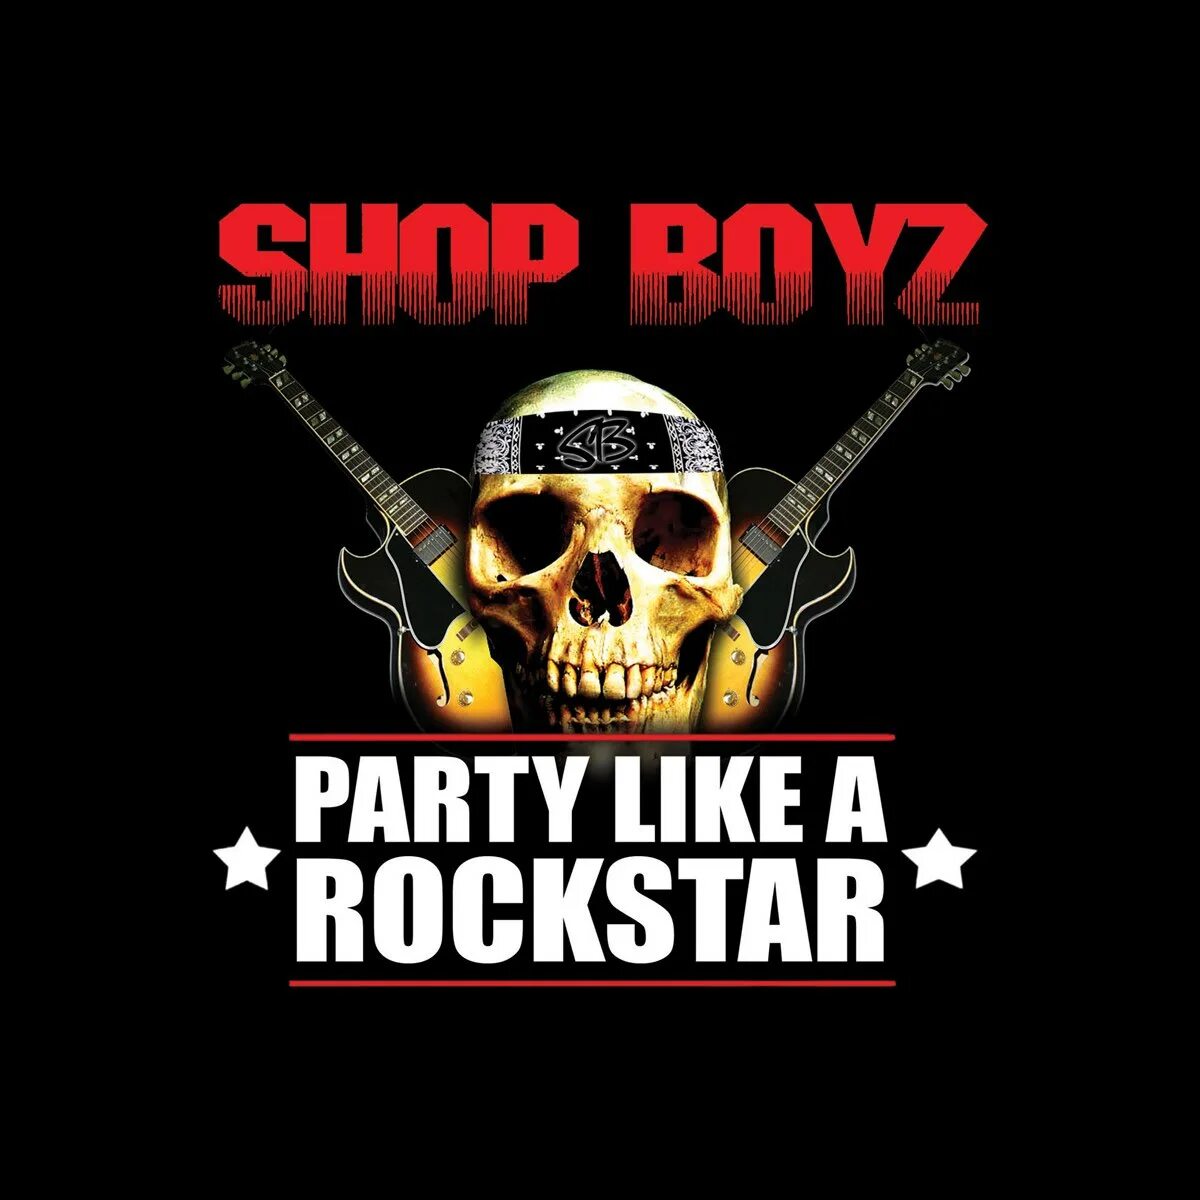 So i party like a rockstar 6arelyhuman. Shop Boyz Party like a Rockstar. Party like a Rockstar. Shop boys - Rockstar Mentality. Вайт панк рокстар обложка.